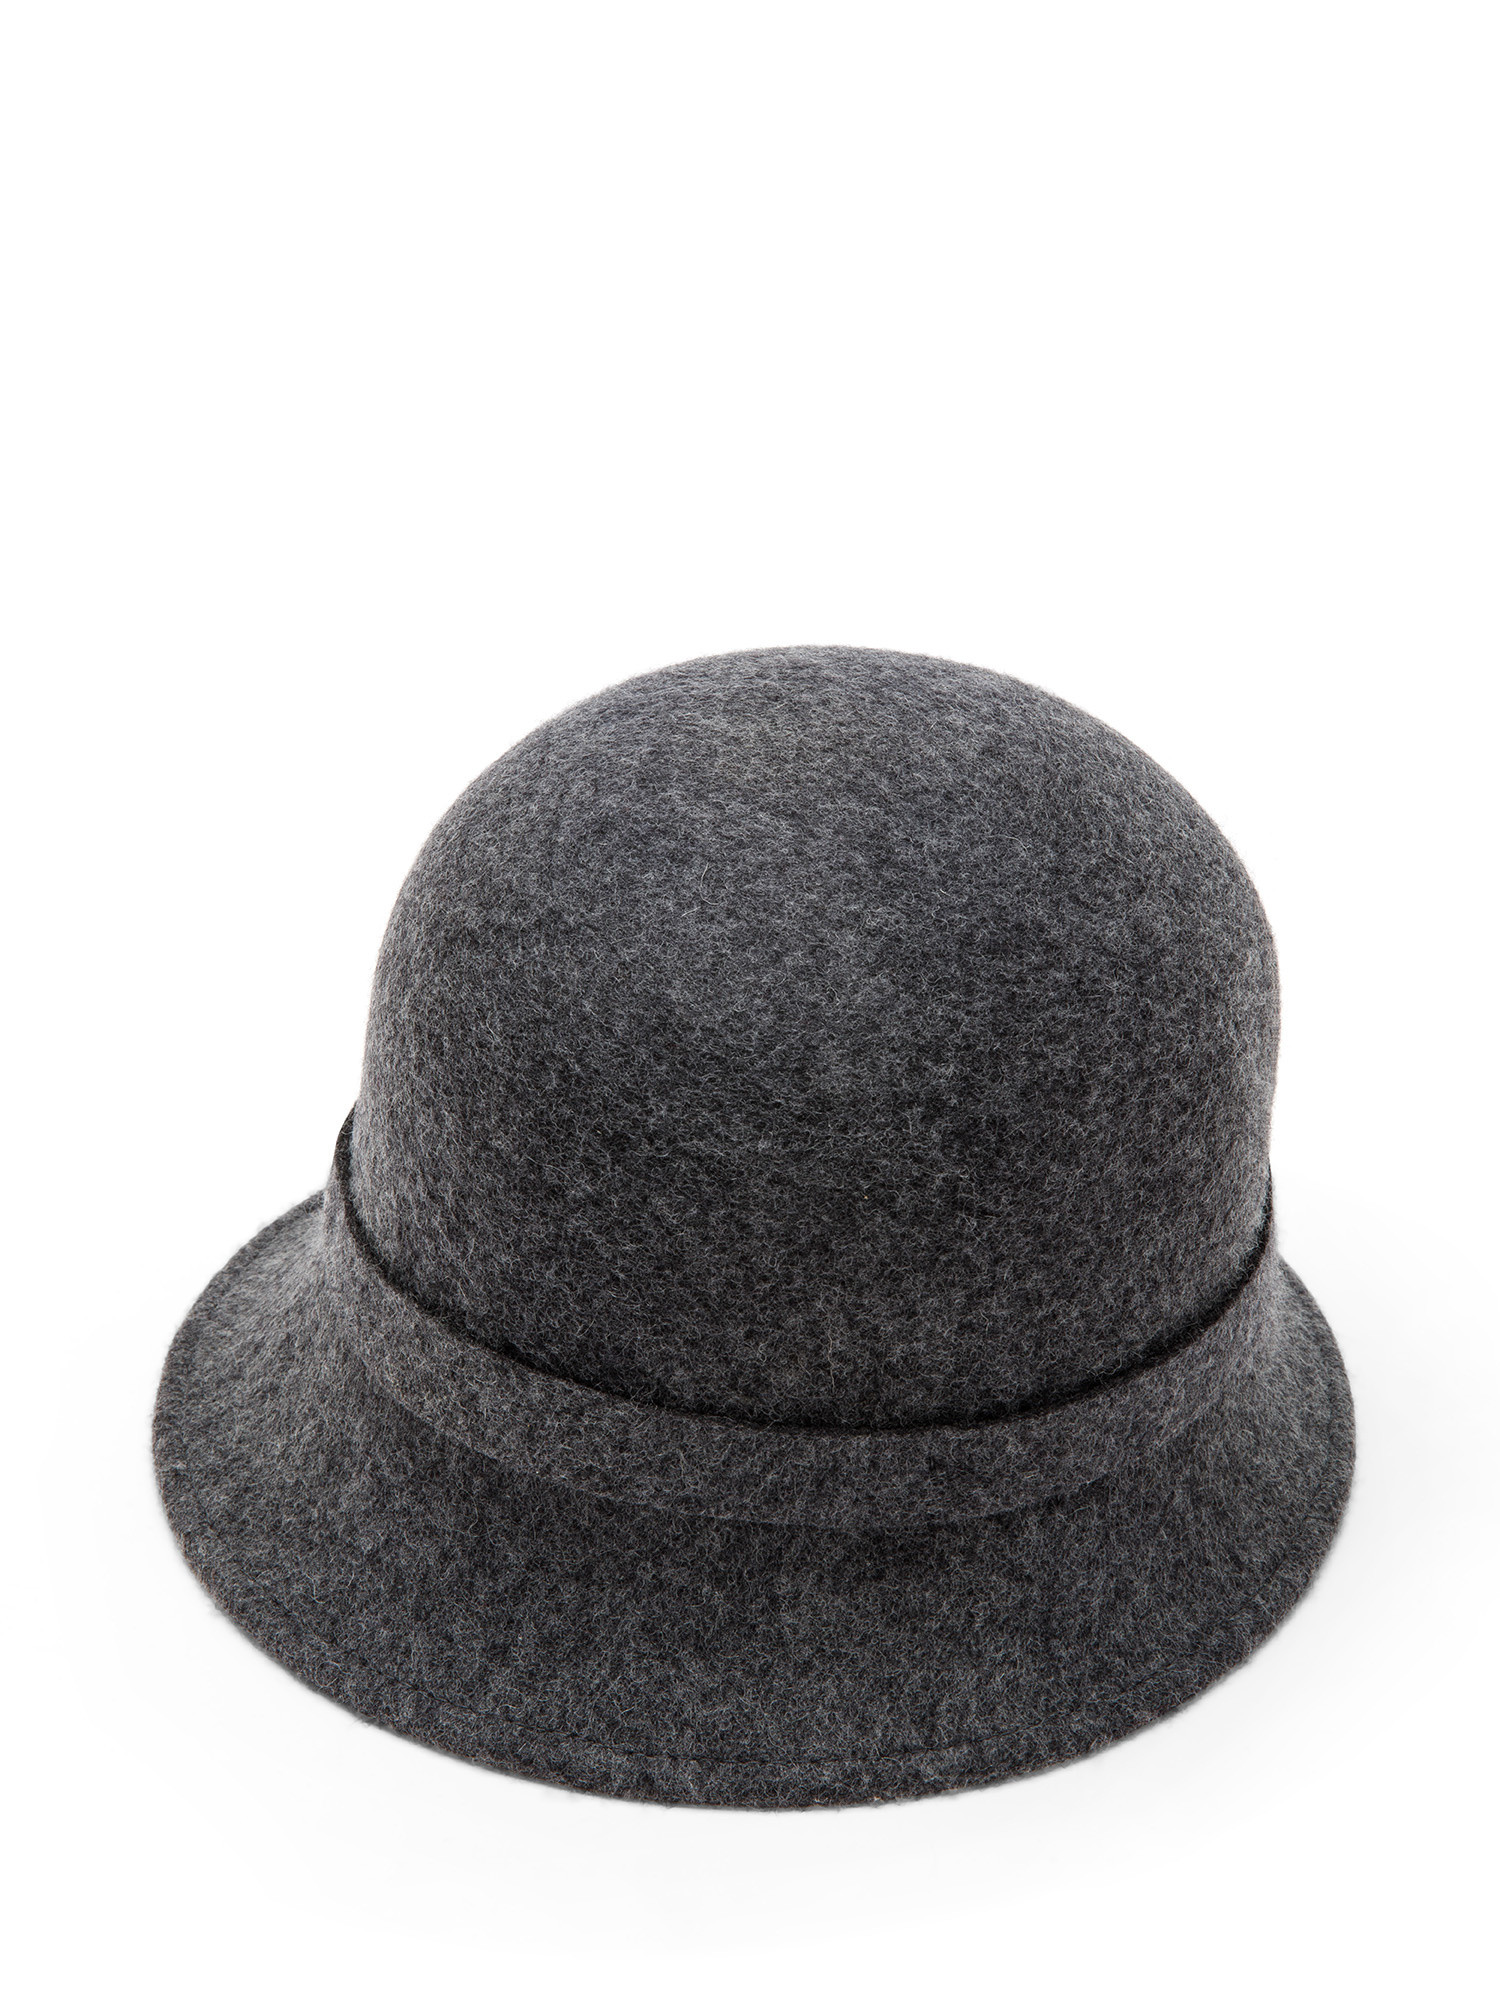 Koan - Cappello con cinturino in feltro, Grigio, large image number 0